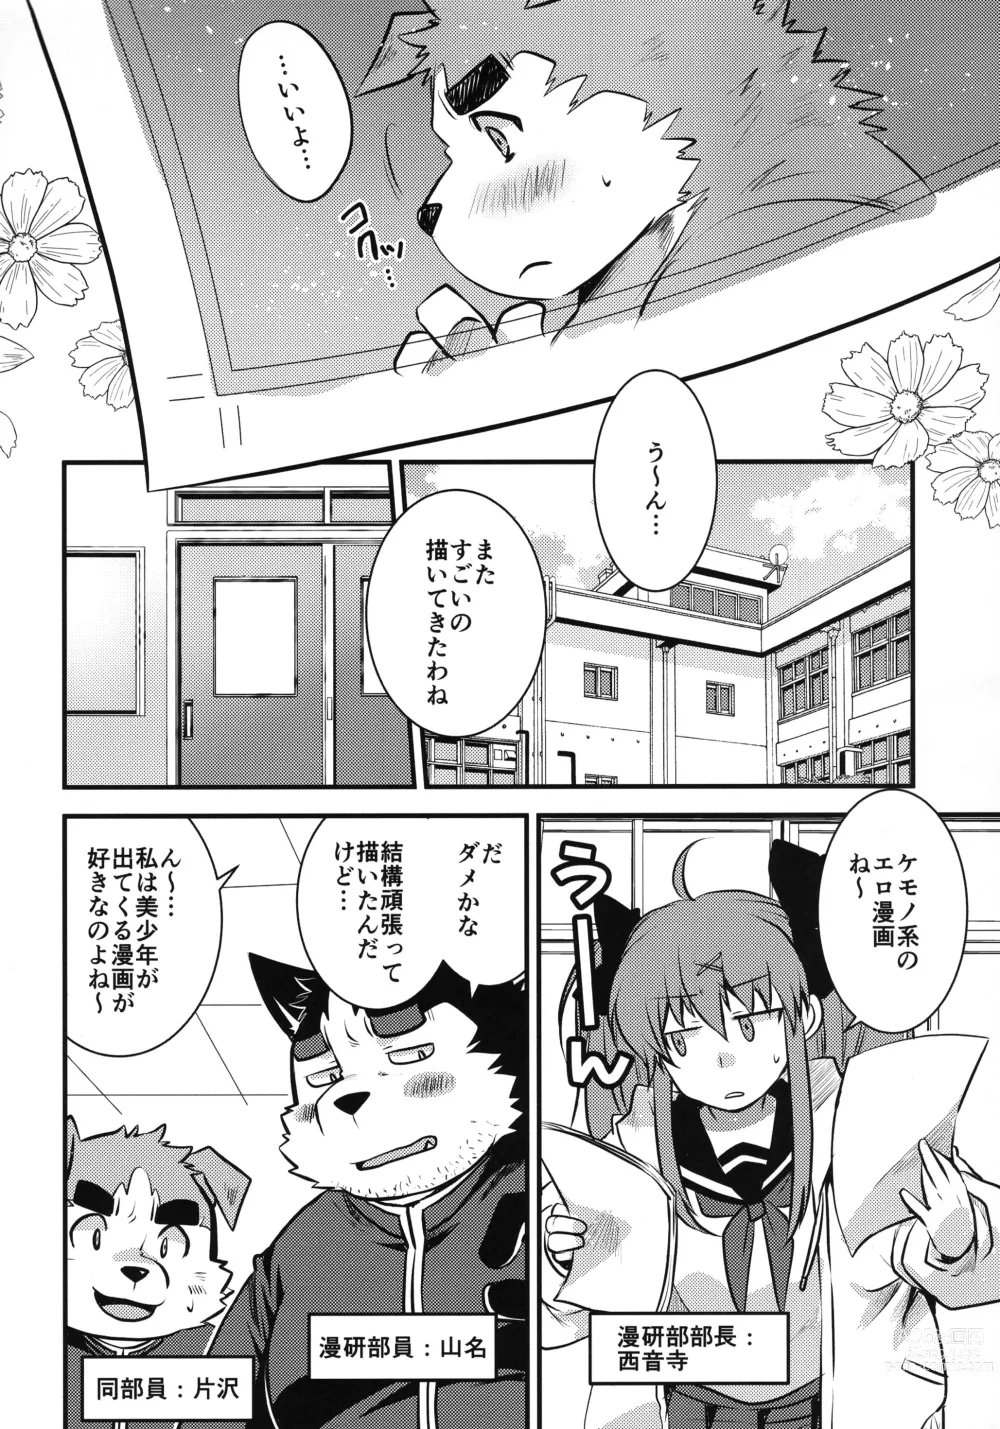 Page 6 of doujinshi Eccentric Shintai Kensa